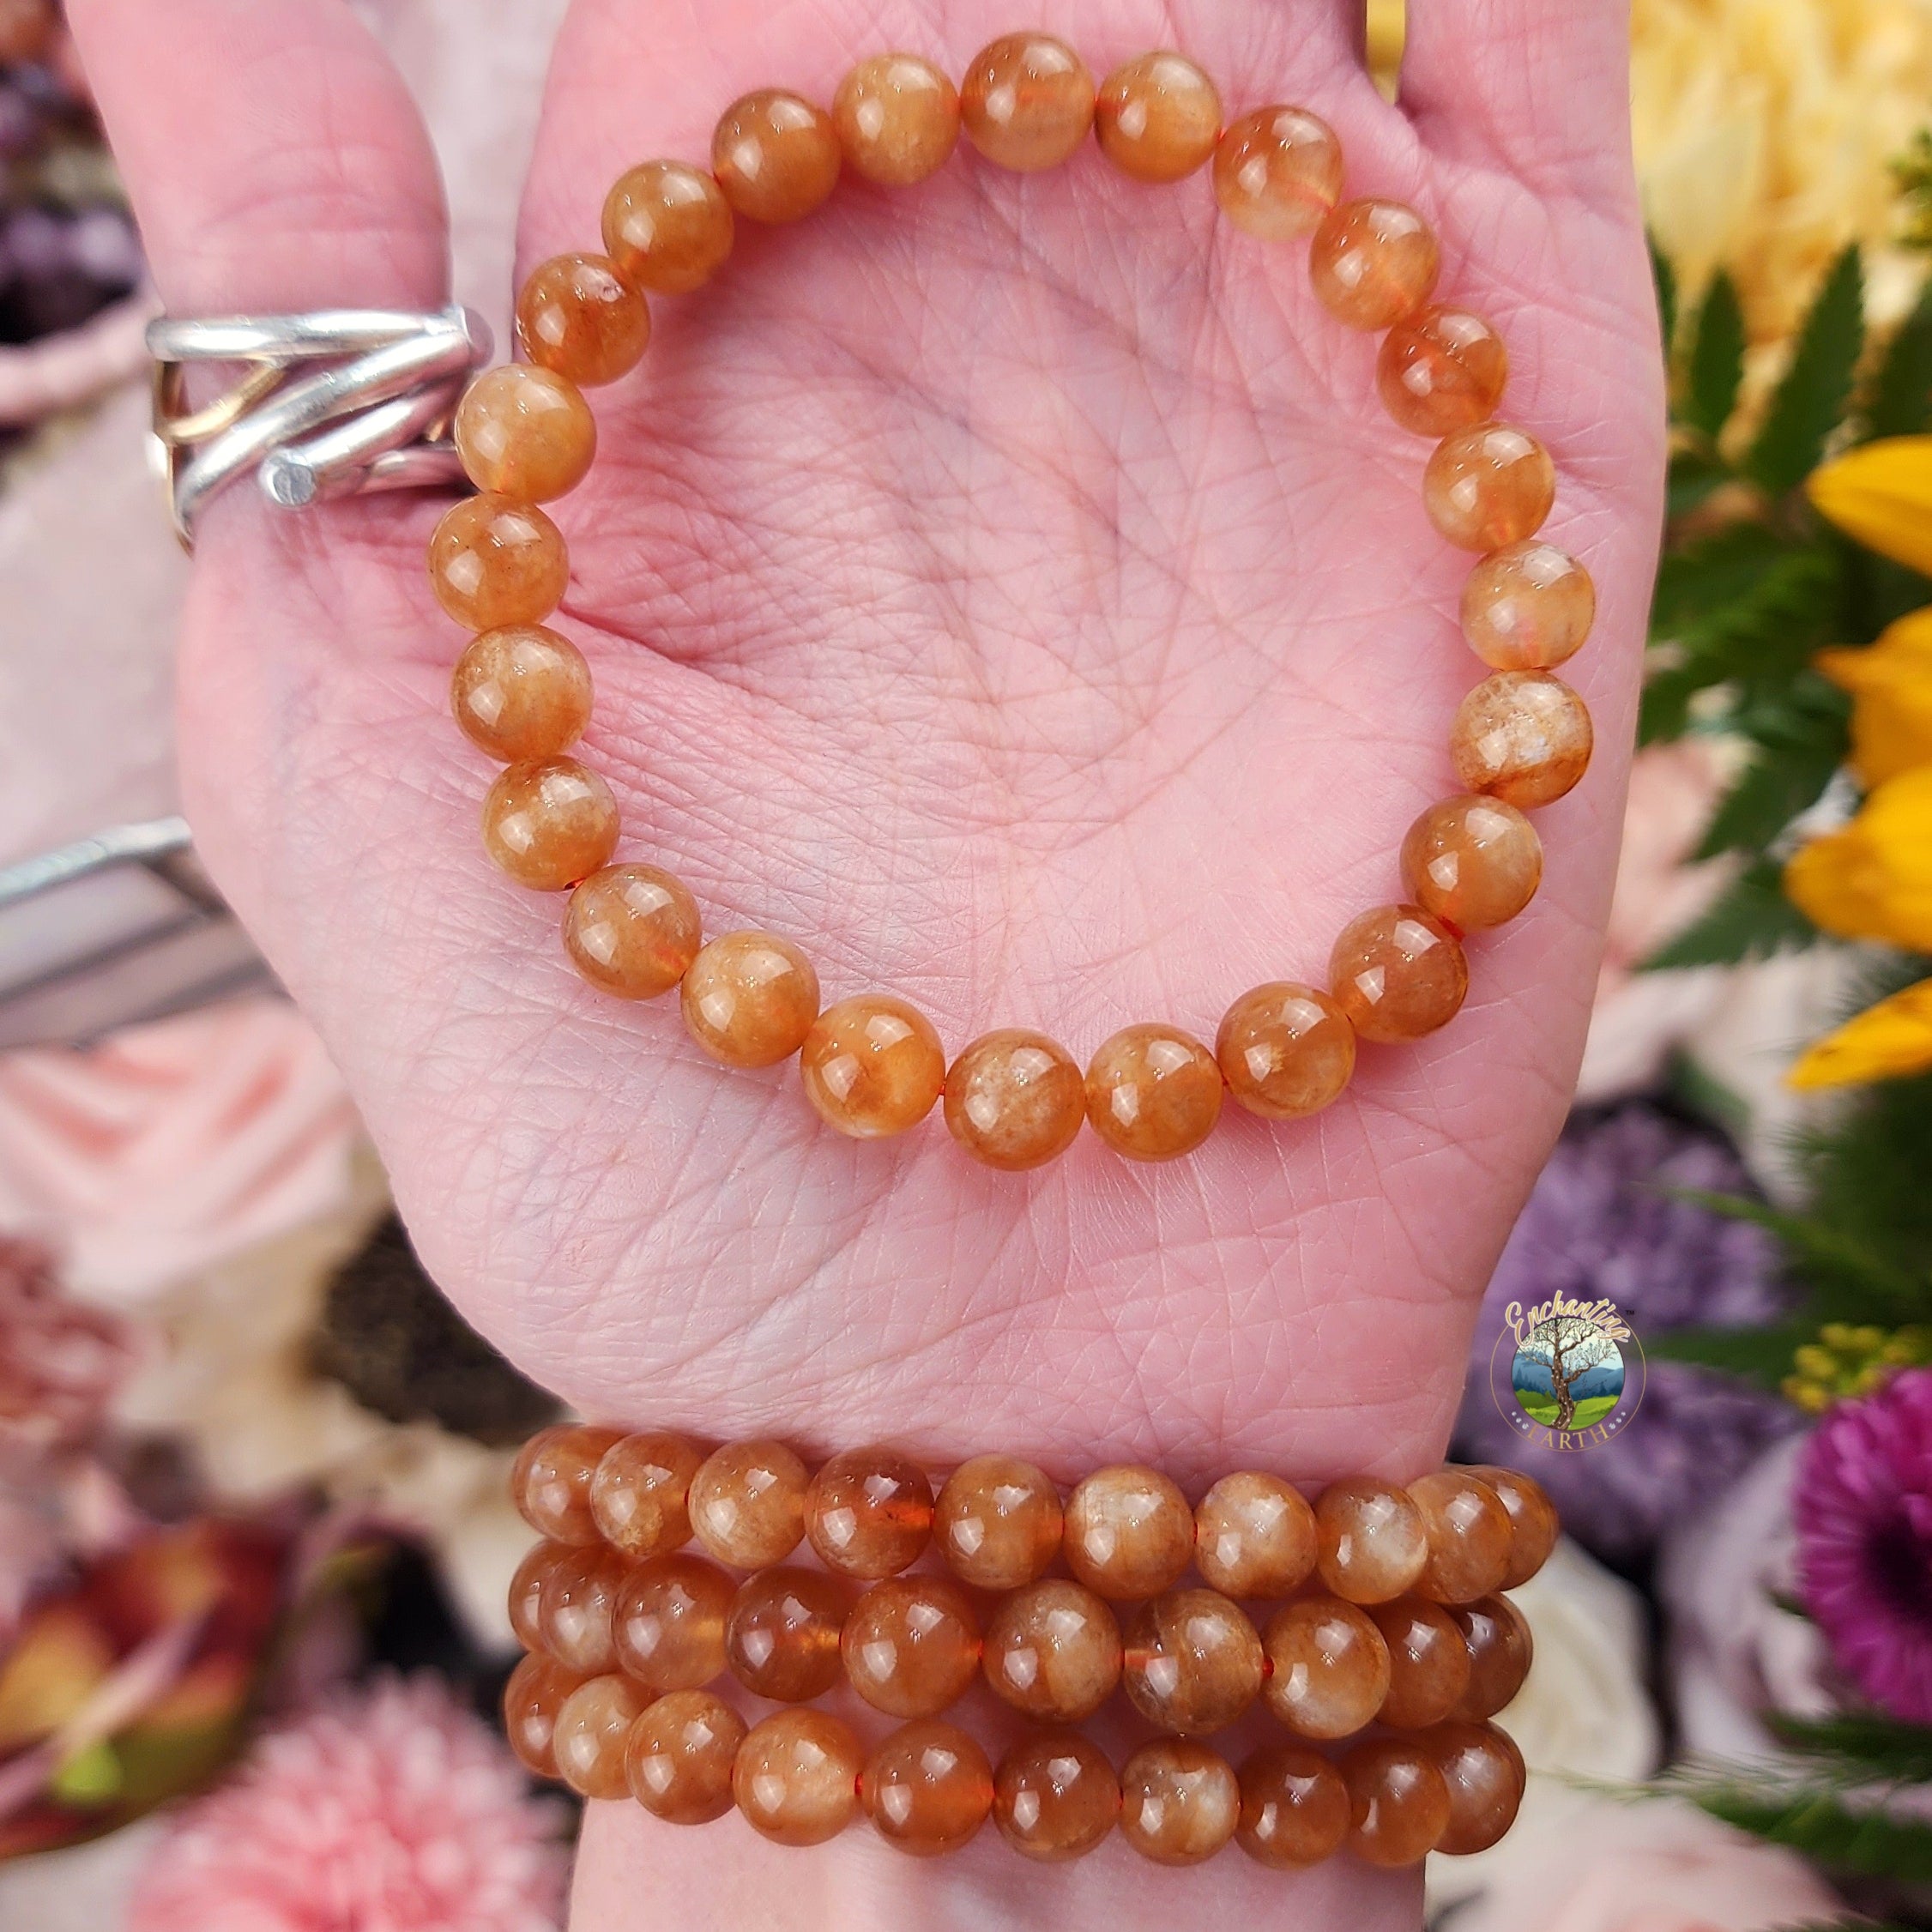 Andesine Golden Labradorite Bracelet for Elevating your Consciousness